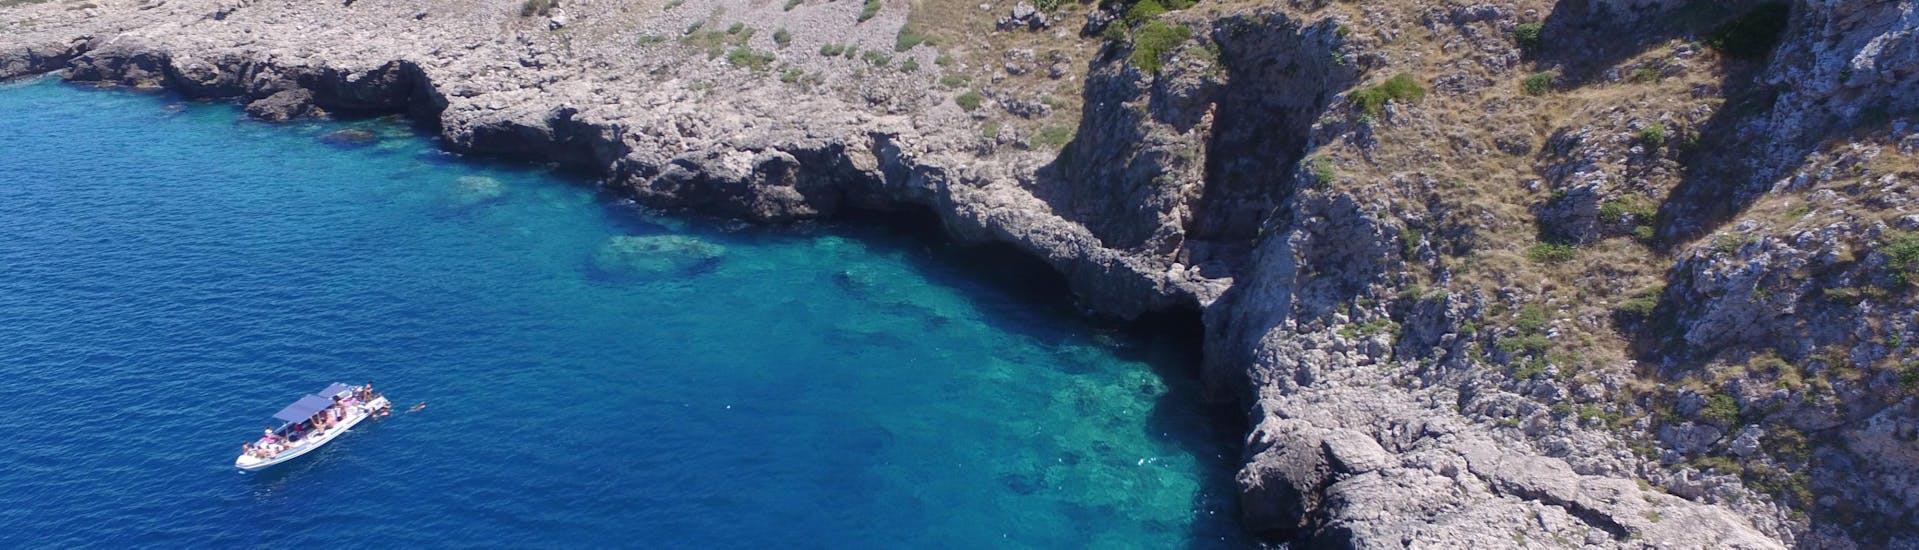 RIB Bootstour nach Porto Selvaggio und seinen Grotten.